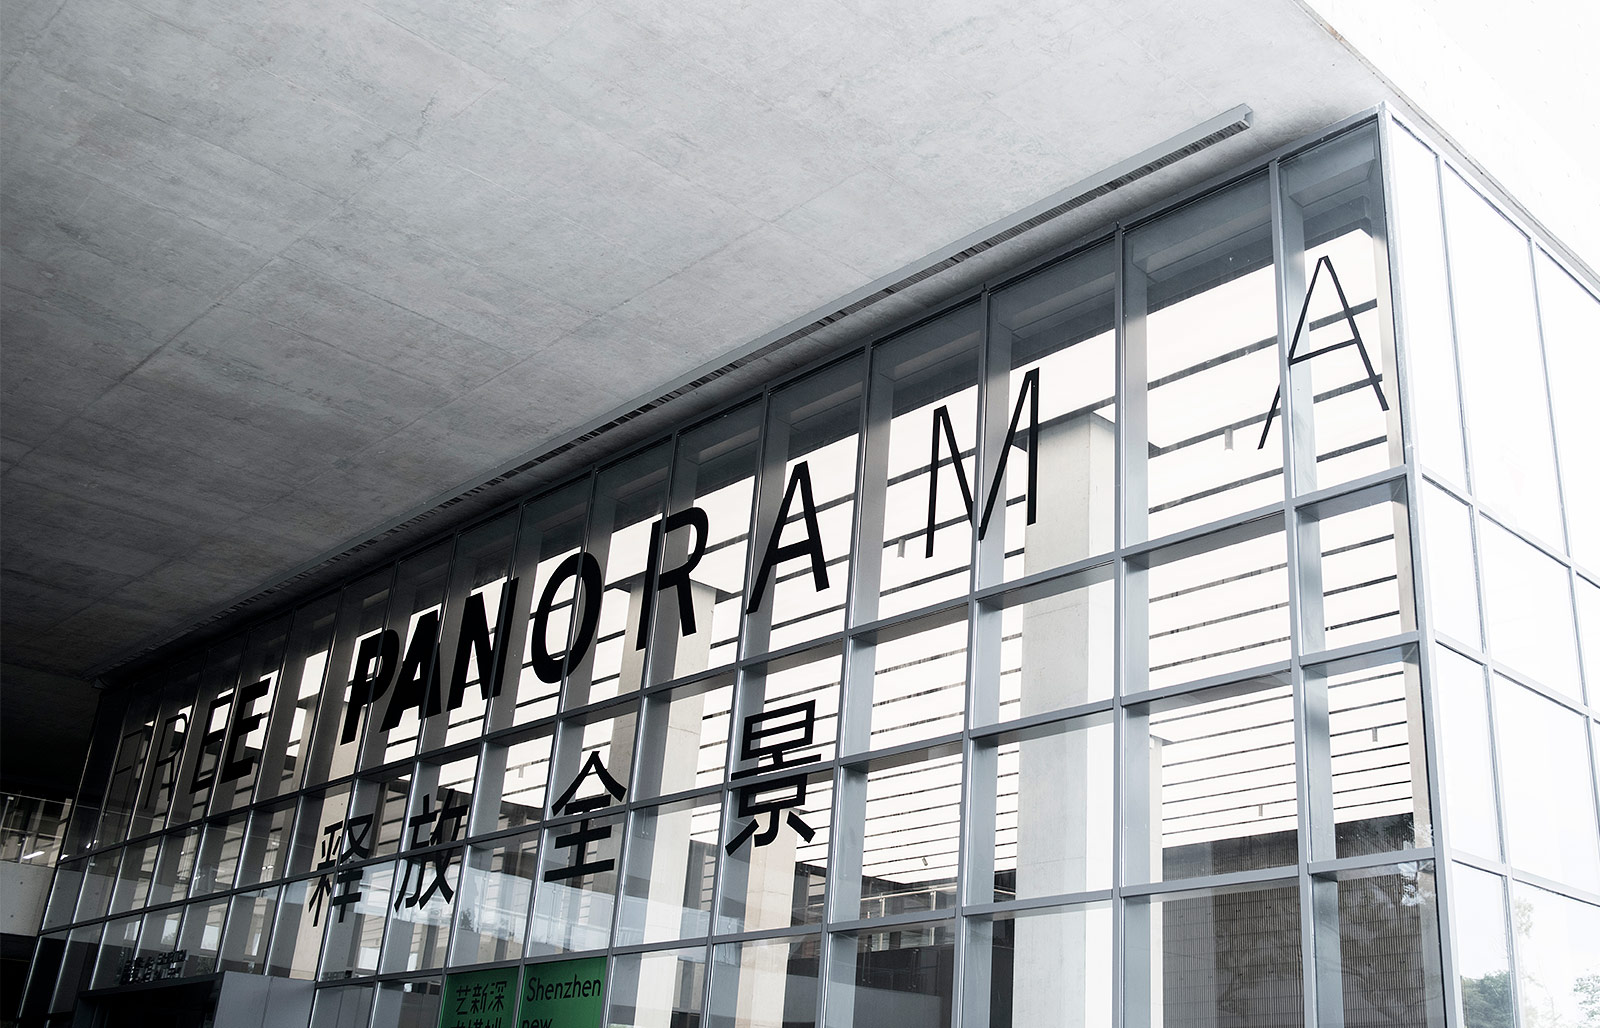 Streamers, installation view, Shenzhen New Media Art Festival, 2019